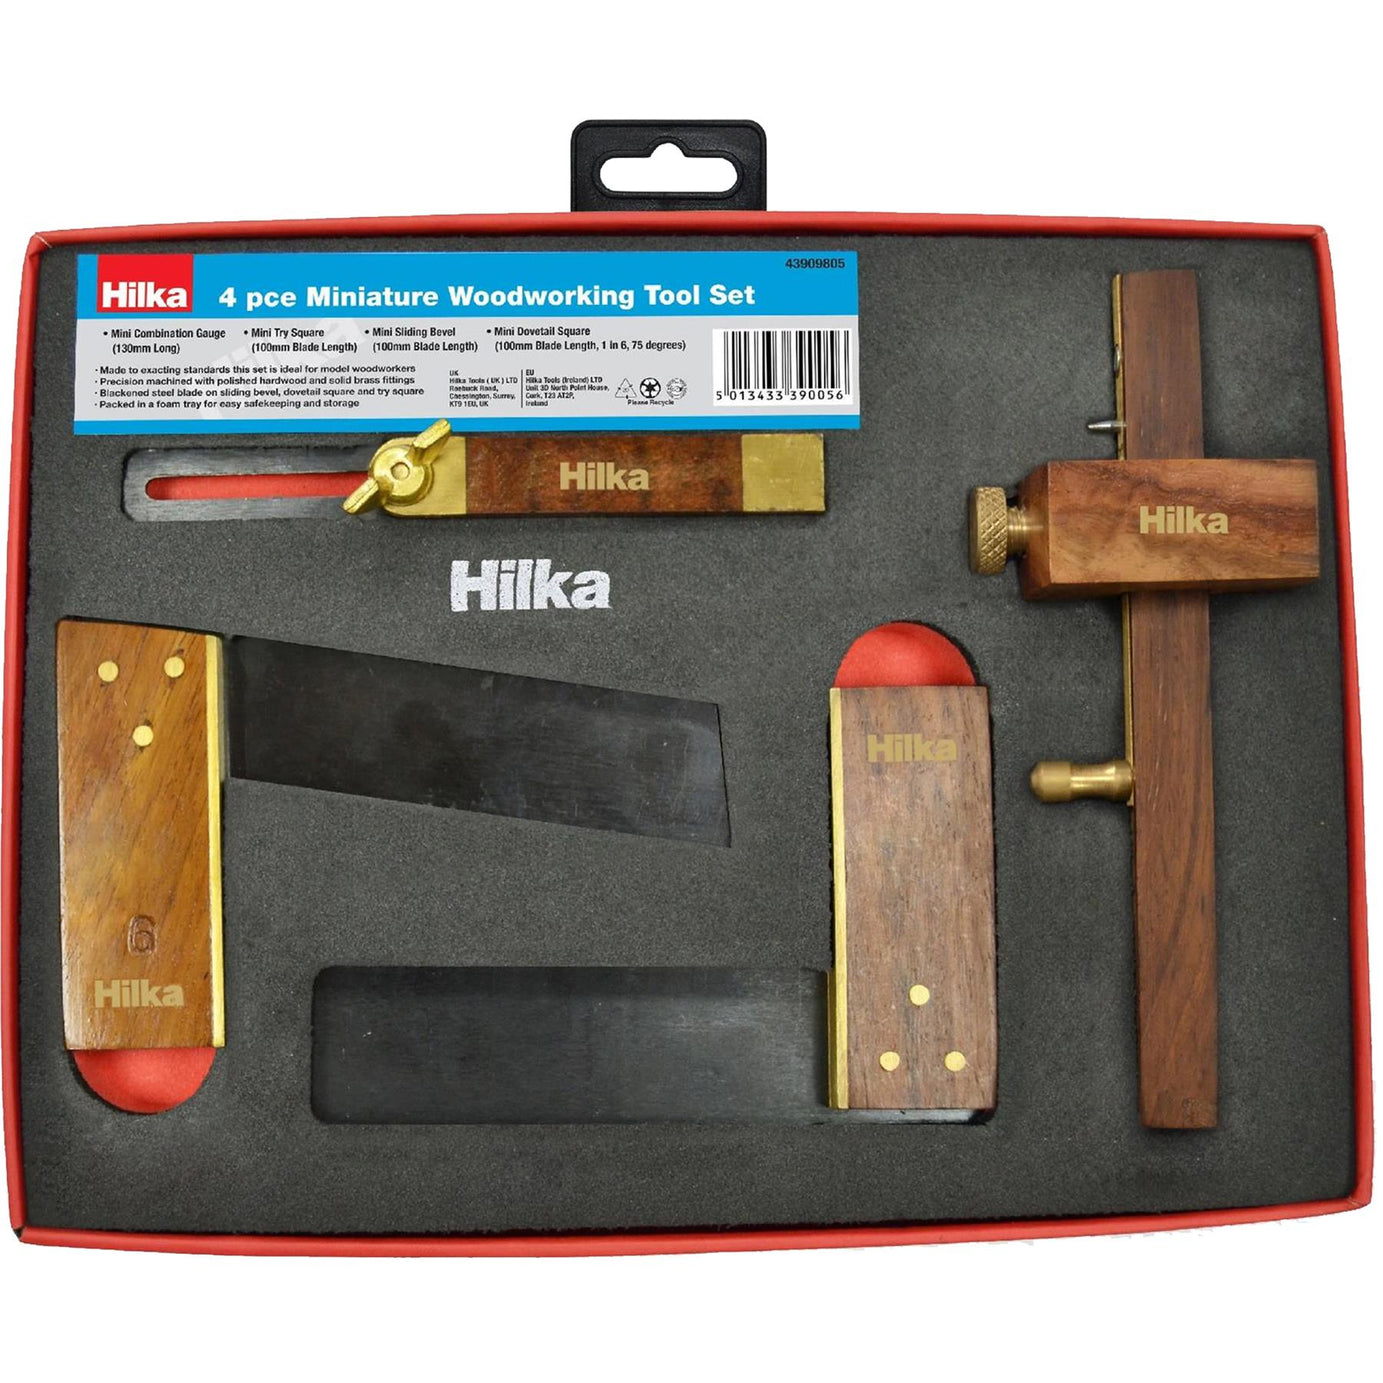 Hilka Miniature Woodworking Tool Set